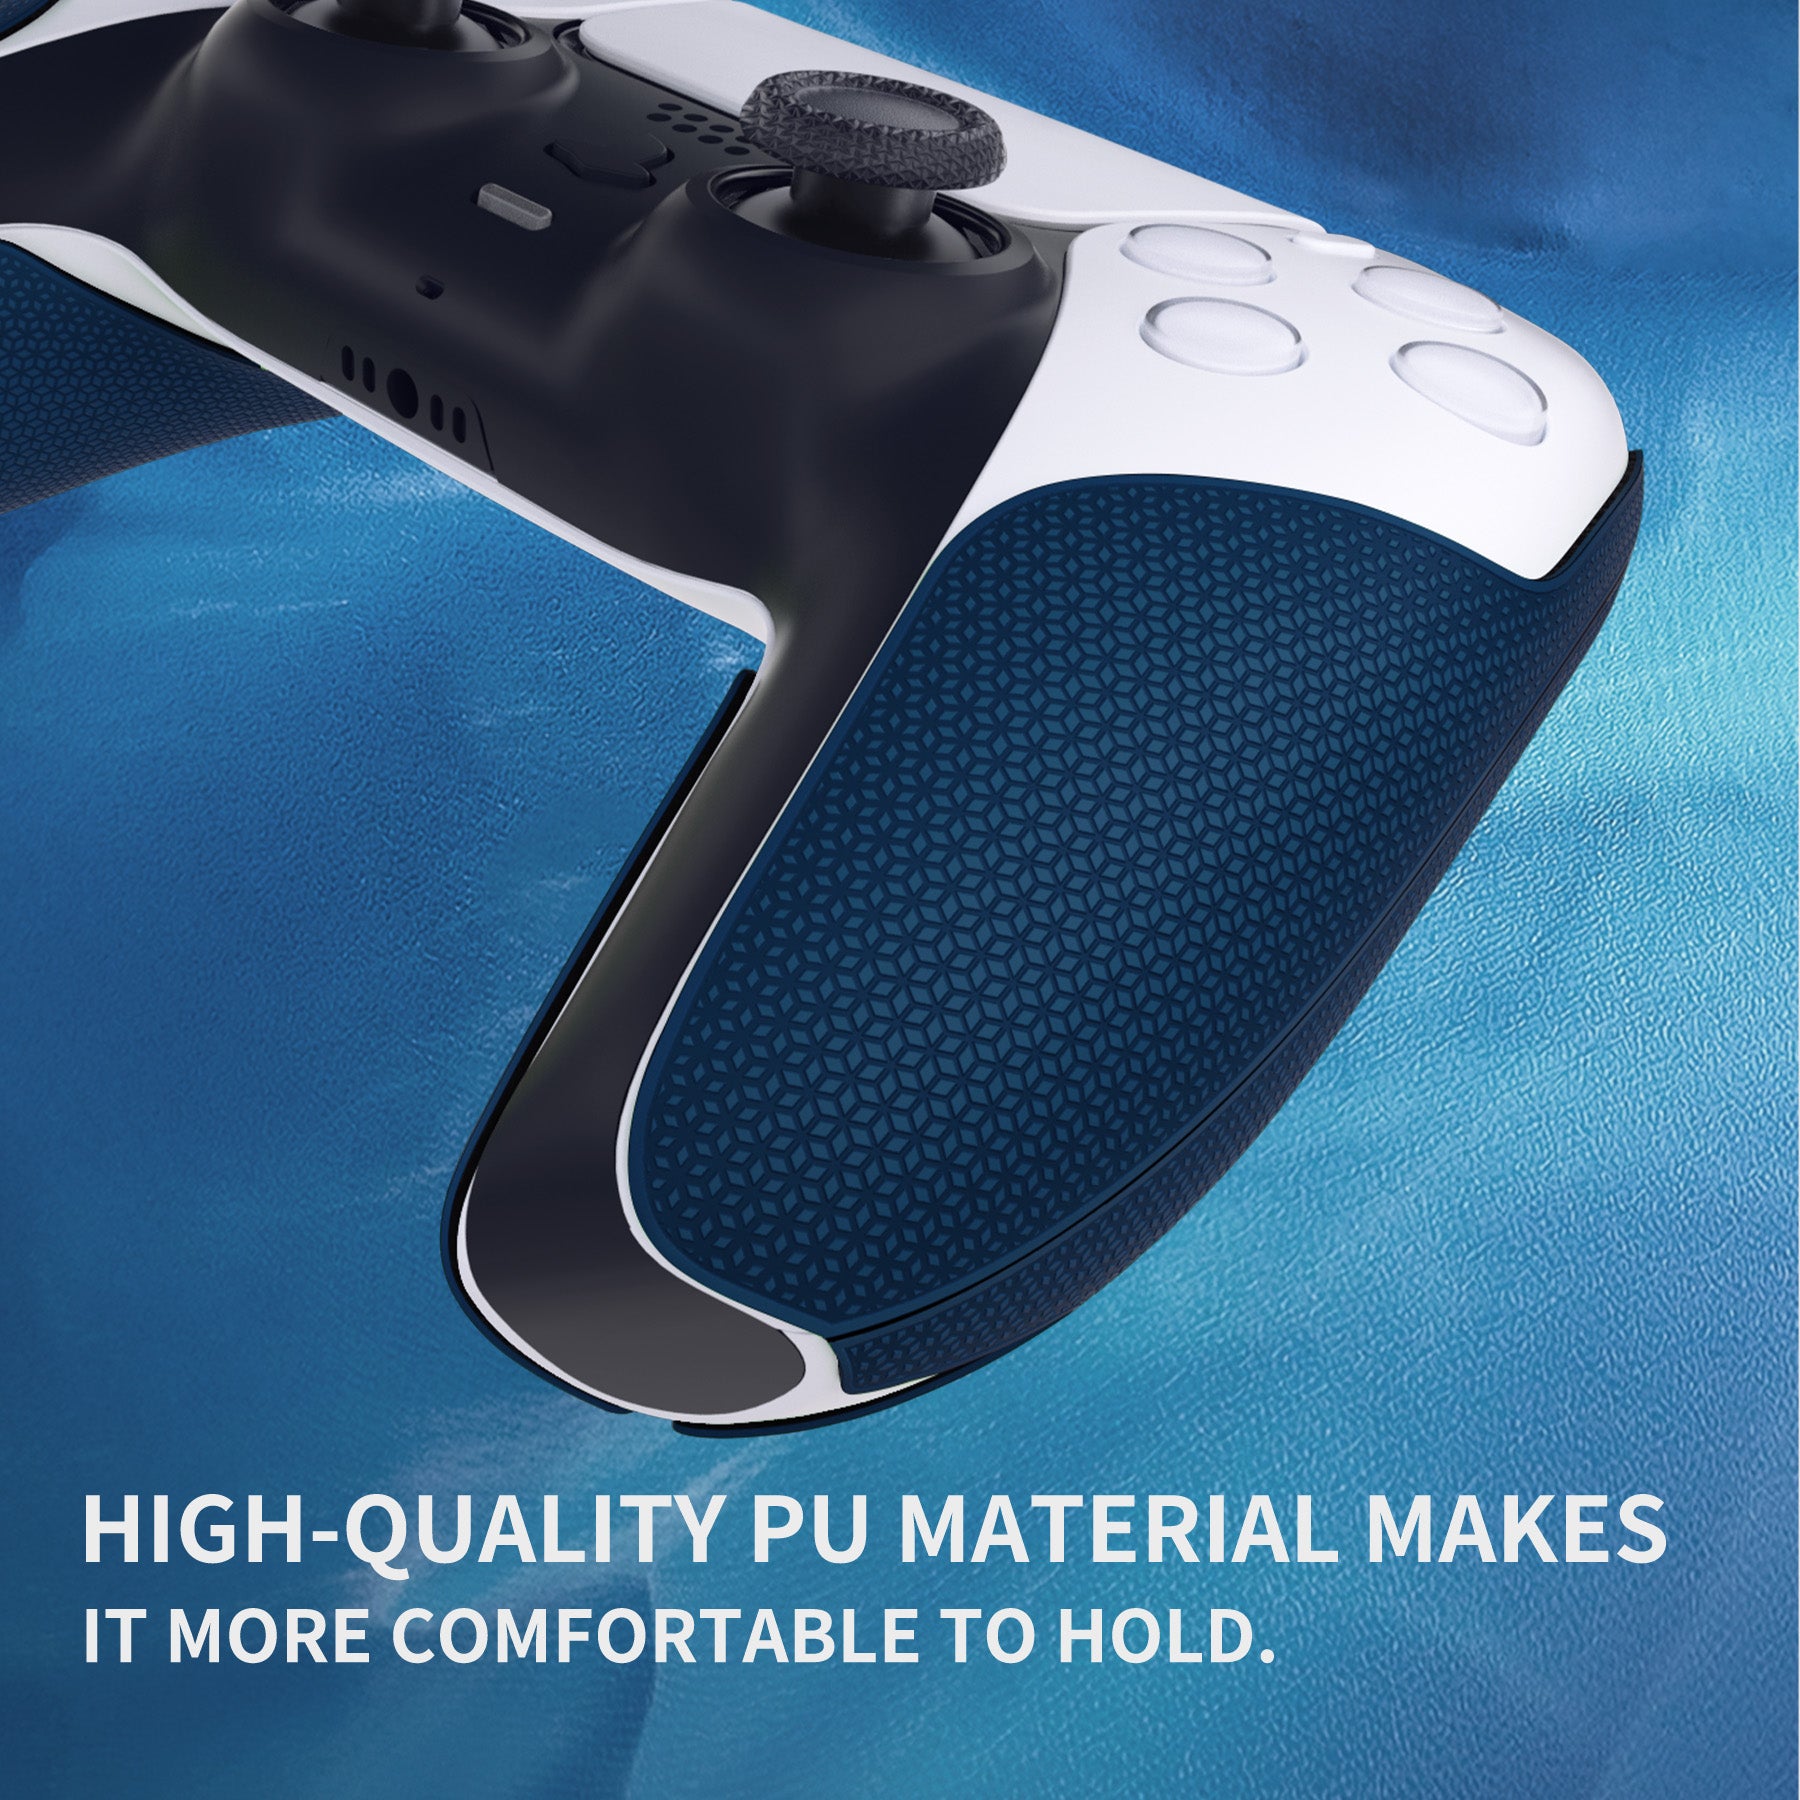 PlayVital Split Design Anti-Skid Sweat-Absorbent Premium Grip for PS5 Controller – Klein Blue - FHPFM003 PlayVital